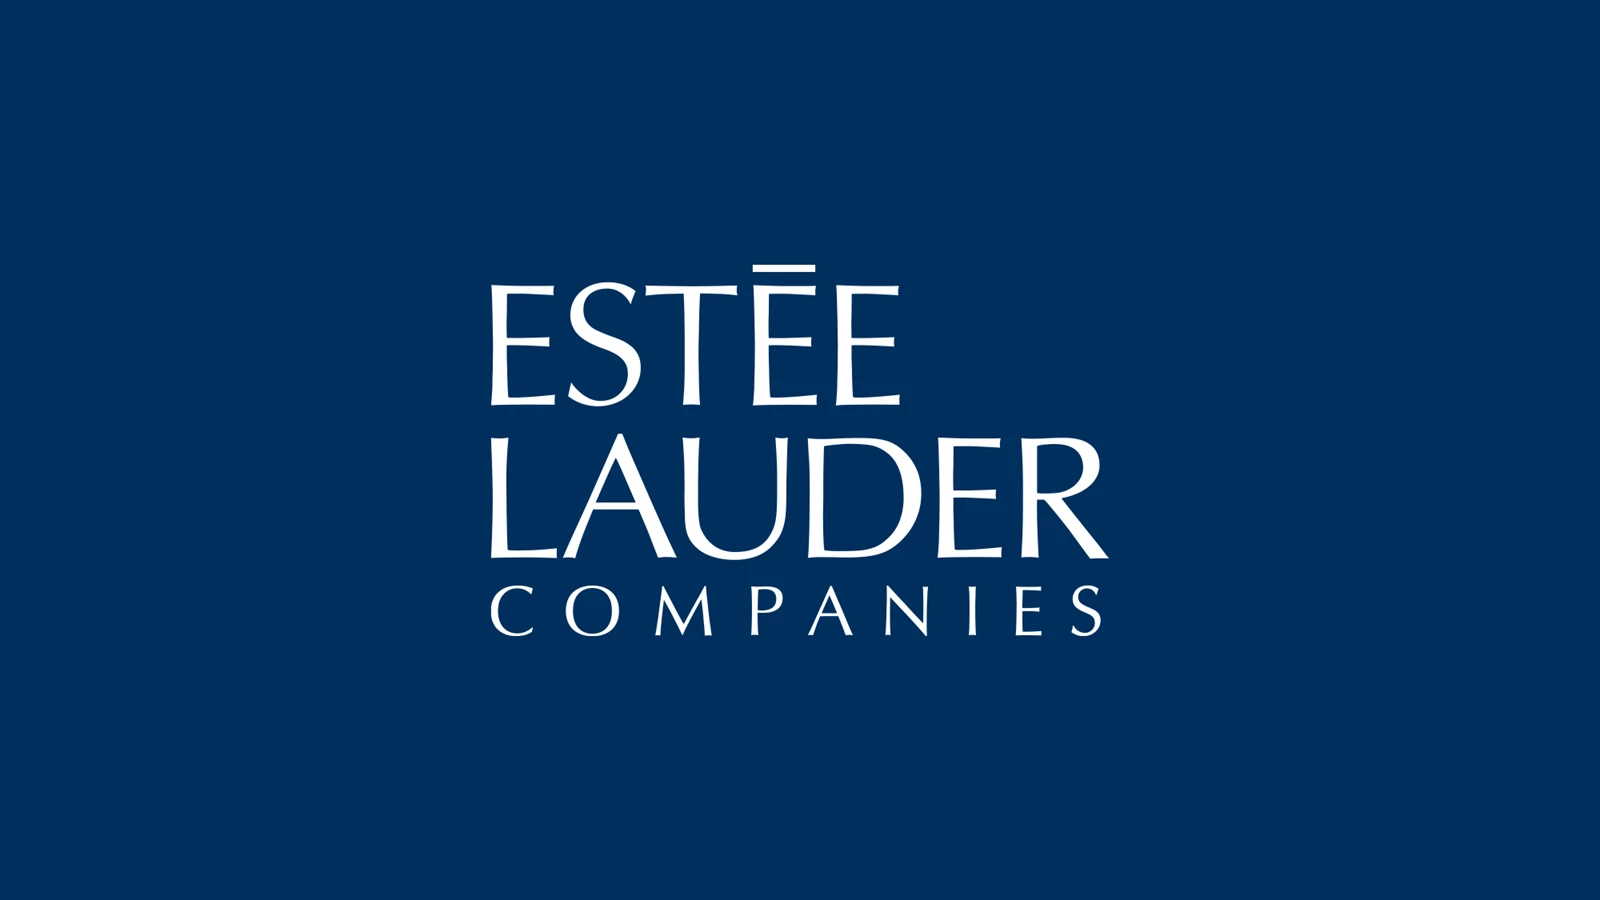 Estee Lauder digital workplace makeover